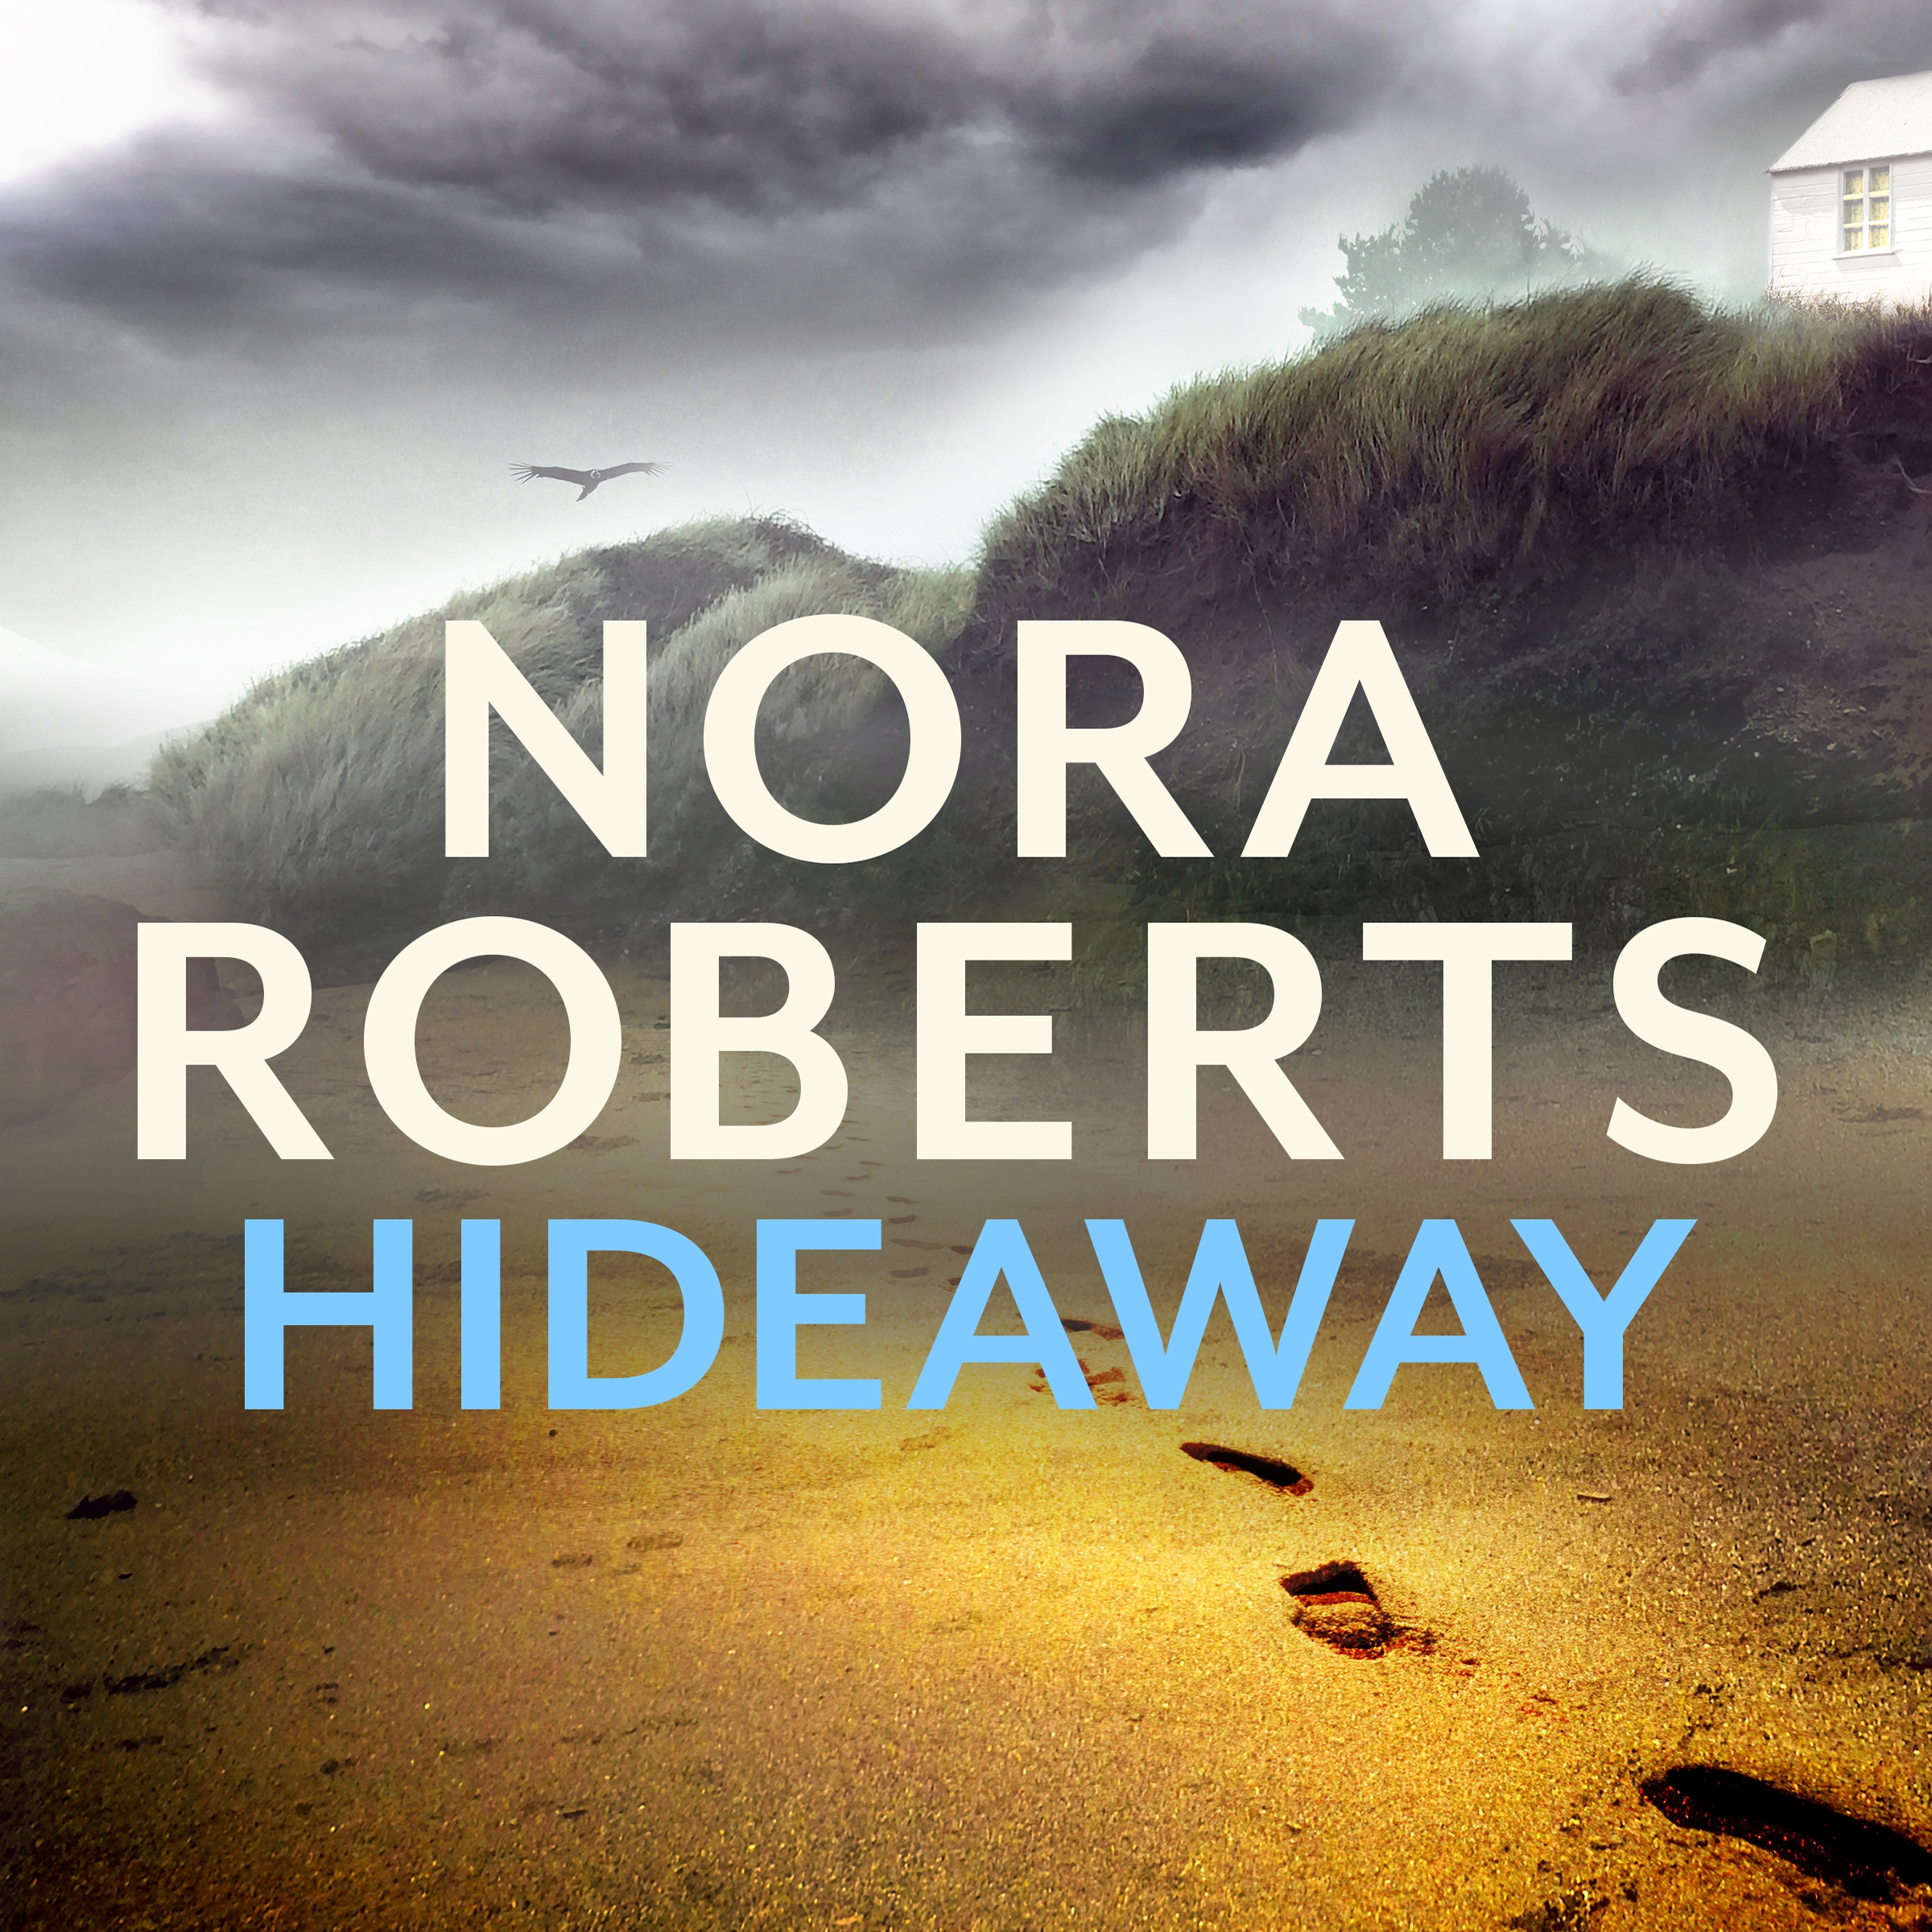 nora roberts hideaway summary